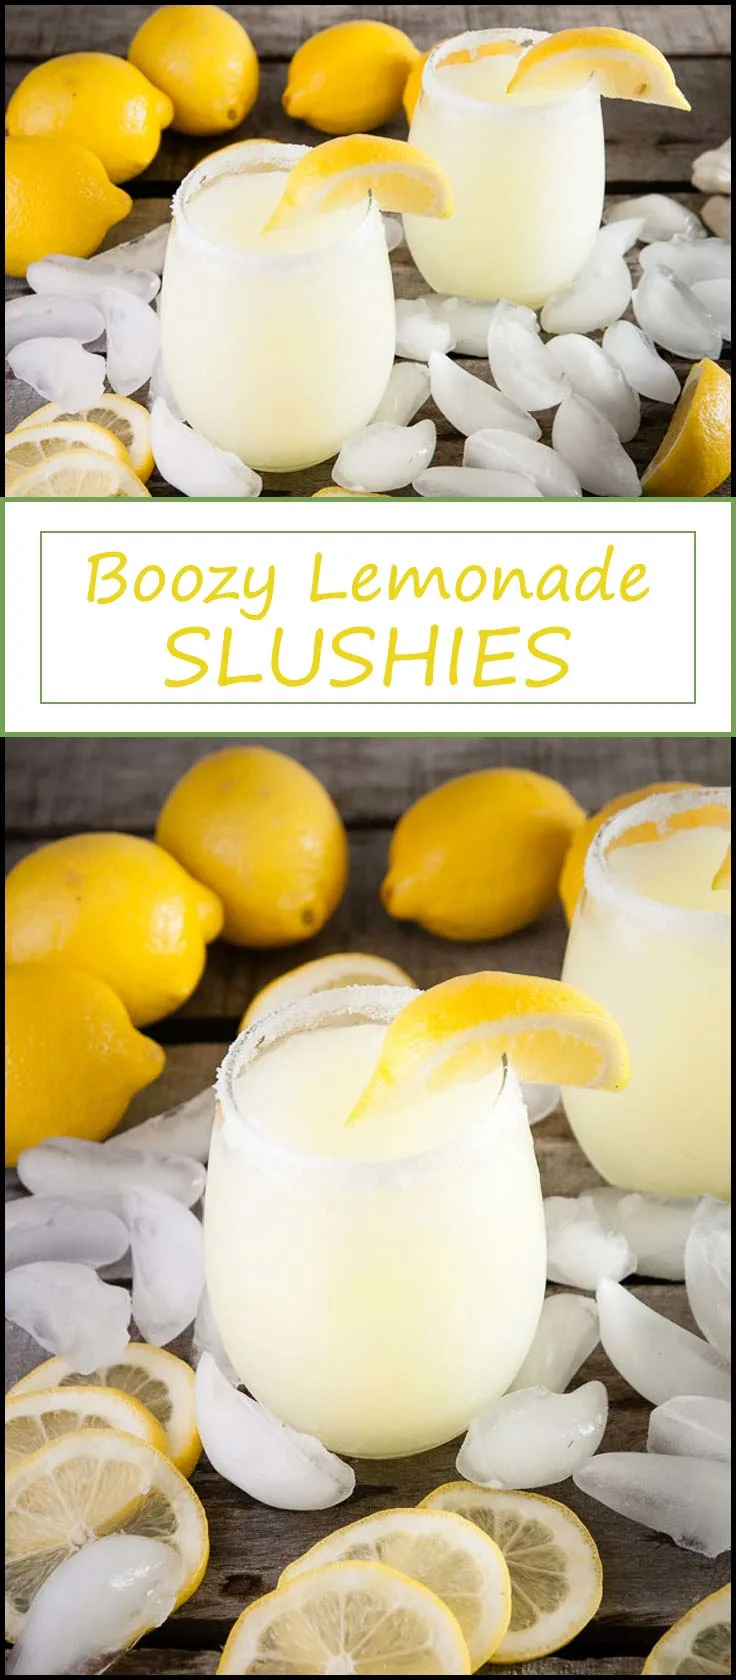 Drink recipe for boozy lemonade slushies with frozen lemonade, limoncello, and citrus vodka from www.seasonedsprinkles.com